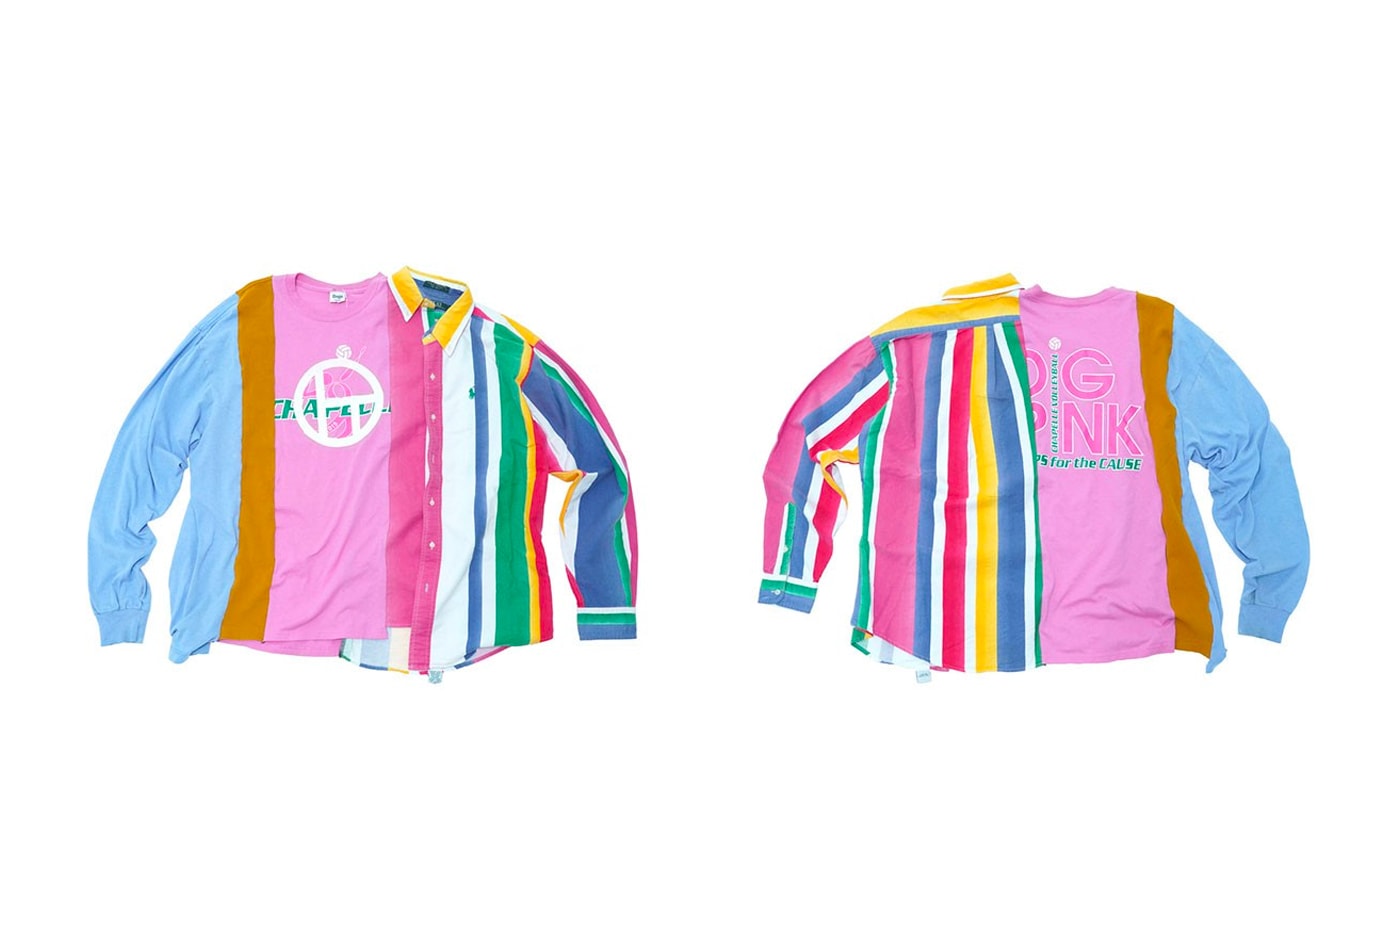 KOHH's Dogs Remake Drops Reworked Jackets & Shirts  dogsoji tokyo vintage grunge patchwork t-shirts button-downs varsity jackets lapel blazers release info drop 